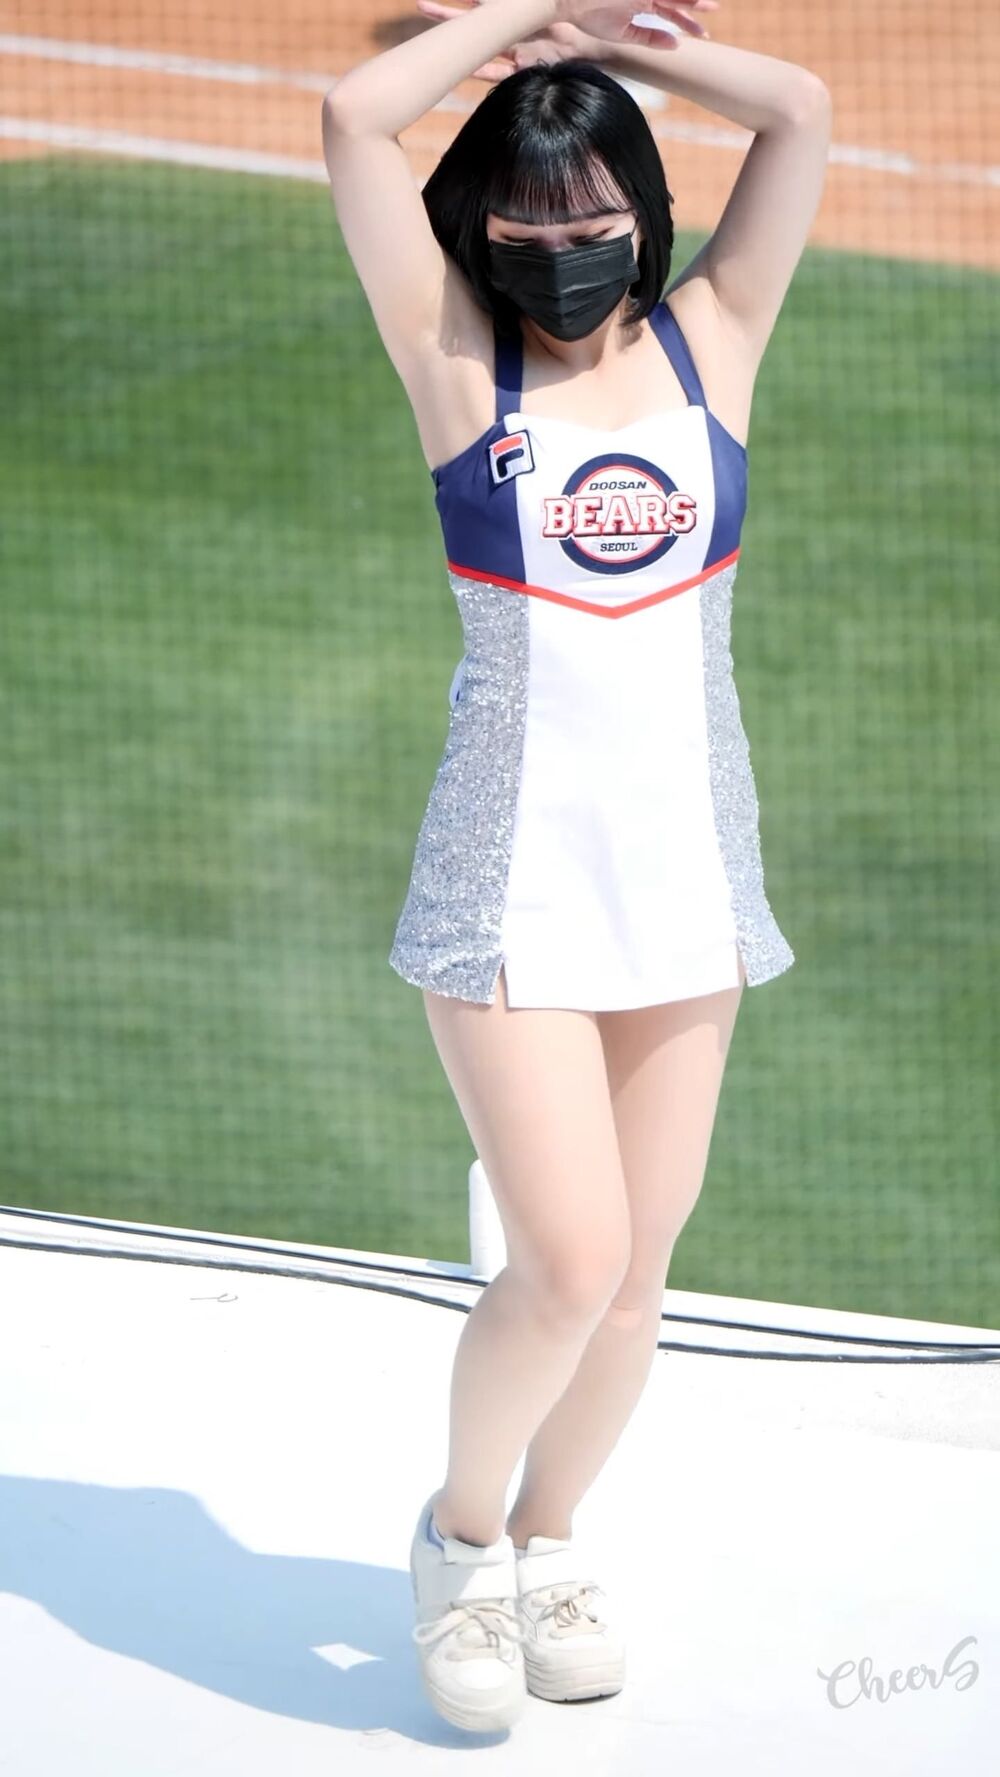 [4K] Savage 박성은 치어리더 직캠 Park Seongeun Cheerleader fancam 두산베어스 220521.mkv_20220525_110506.834.jpg